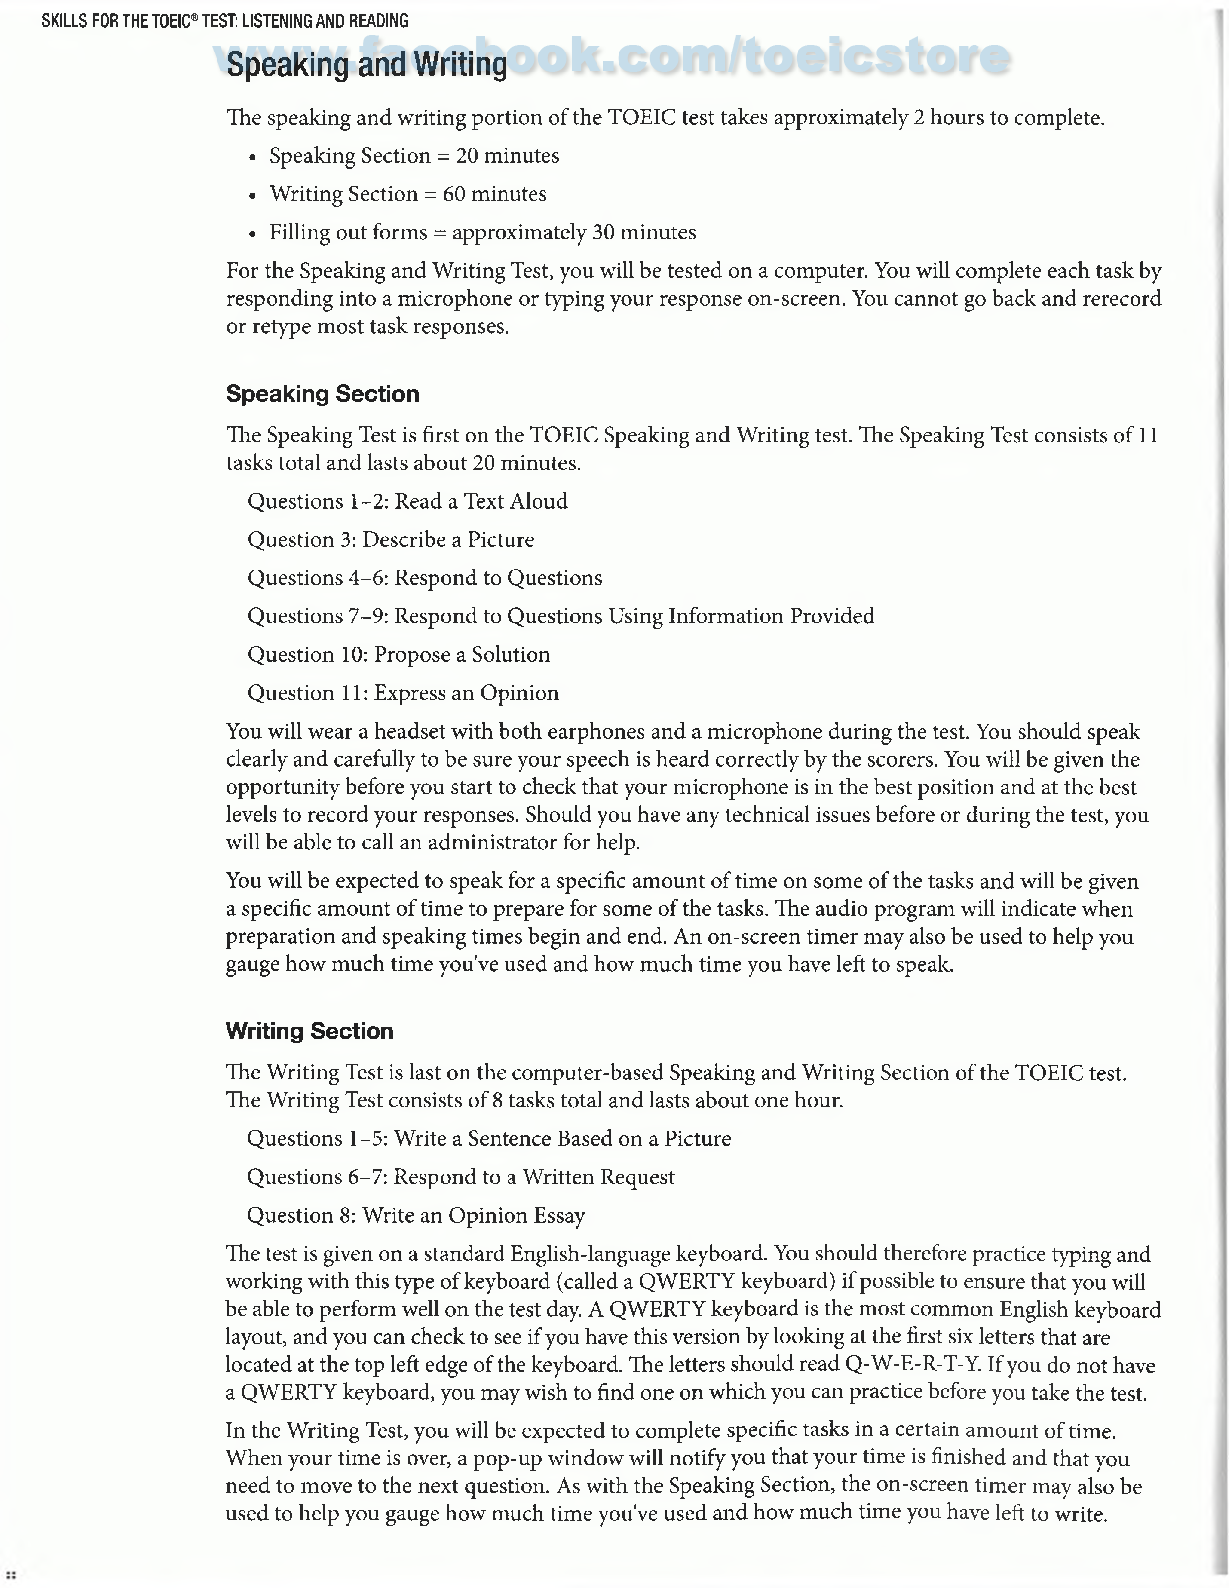 Sách Collins Skill for the TOEIC test Reading Listening | Xem online, tải PDF miễn phí (trang 7)